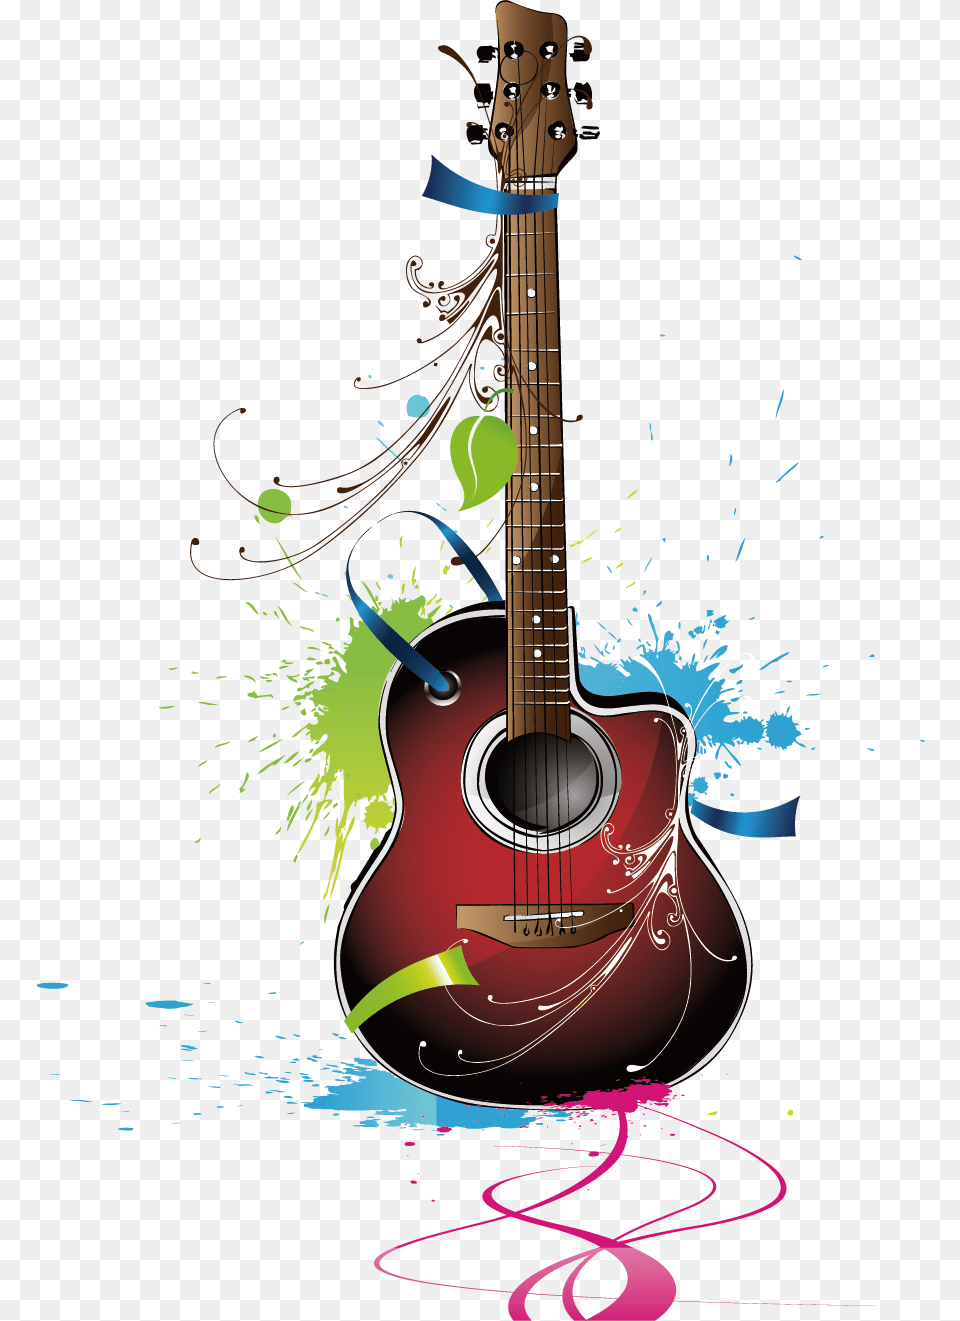 Elements Instruments Guitar Instrument Vector Musical Guitar Musical Instruments, Musical Instrument, Bass Guitar Png Image